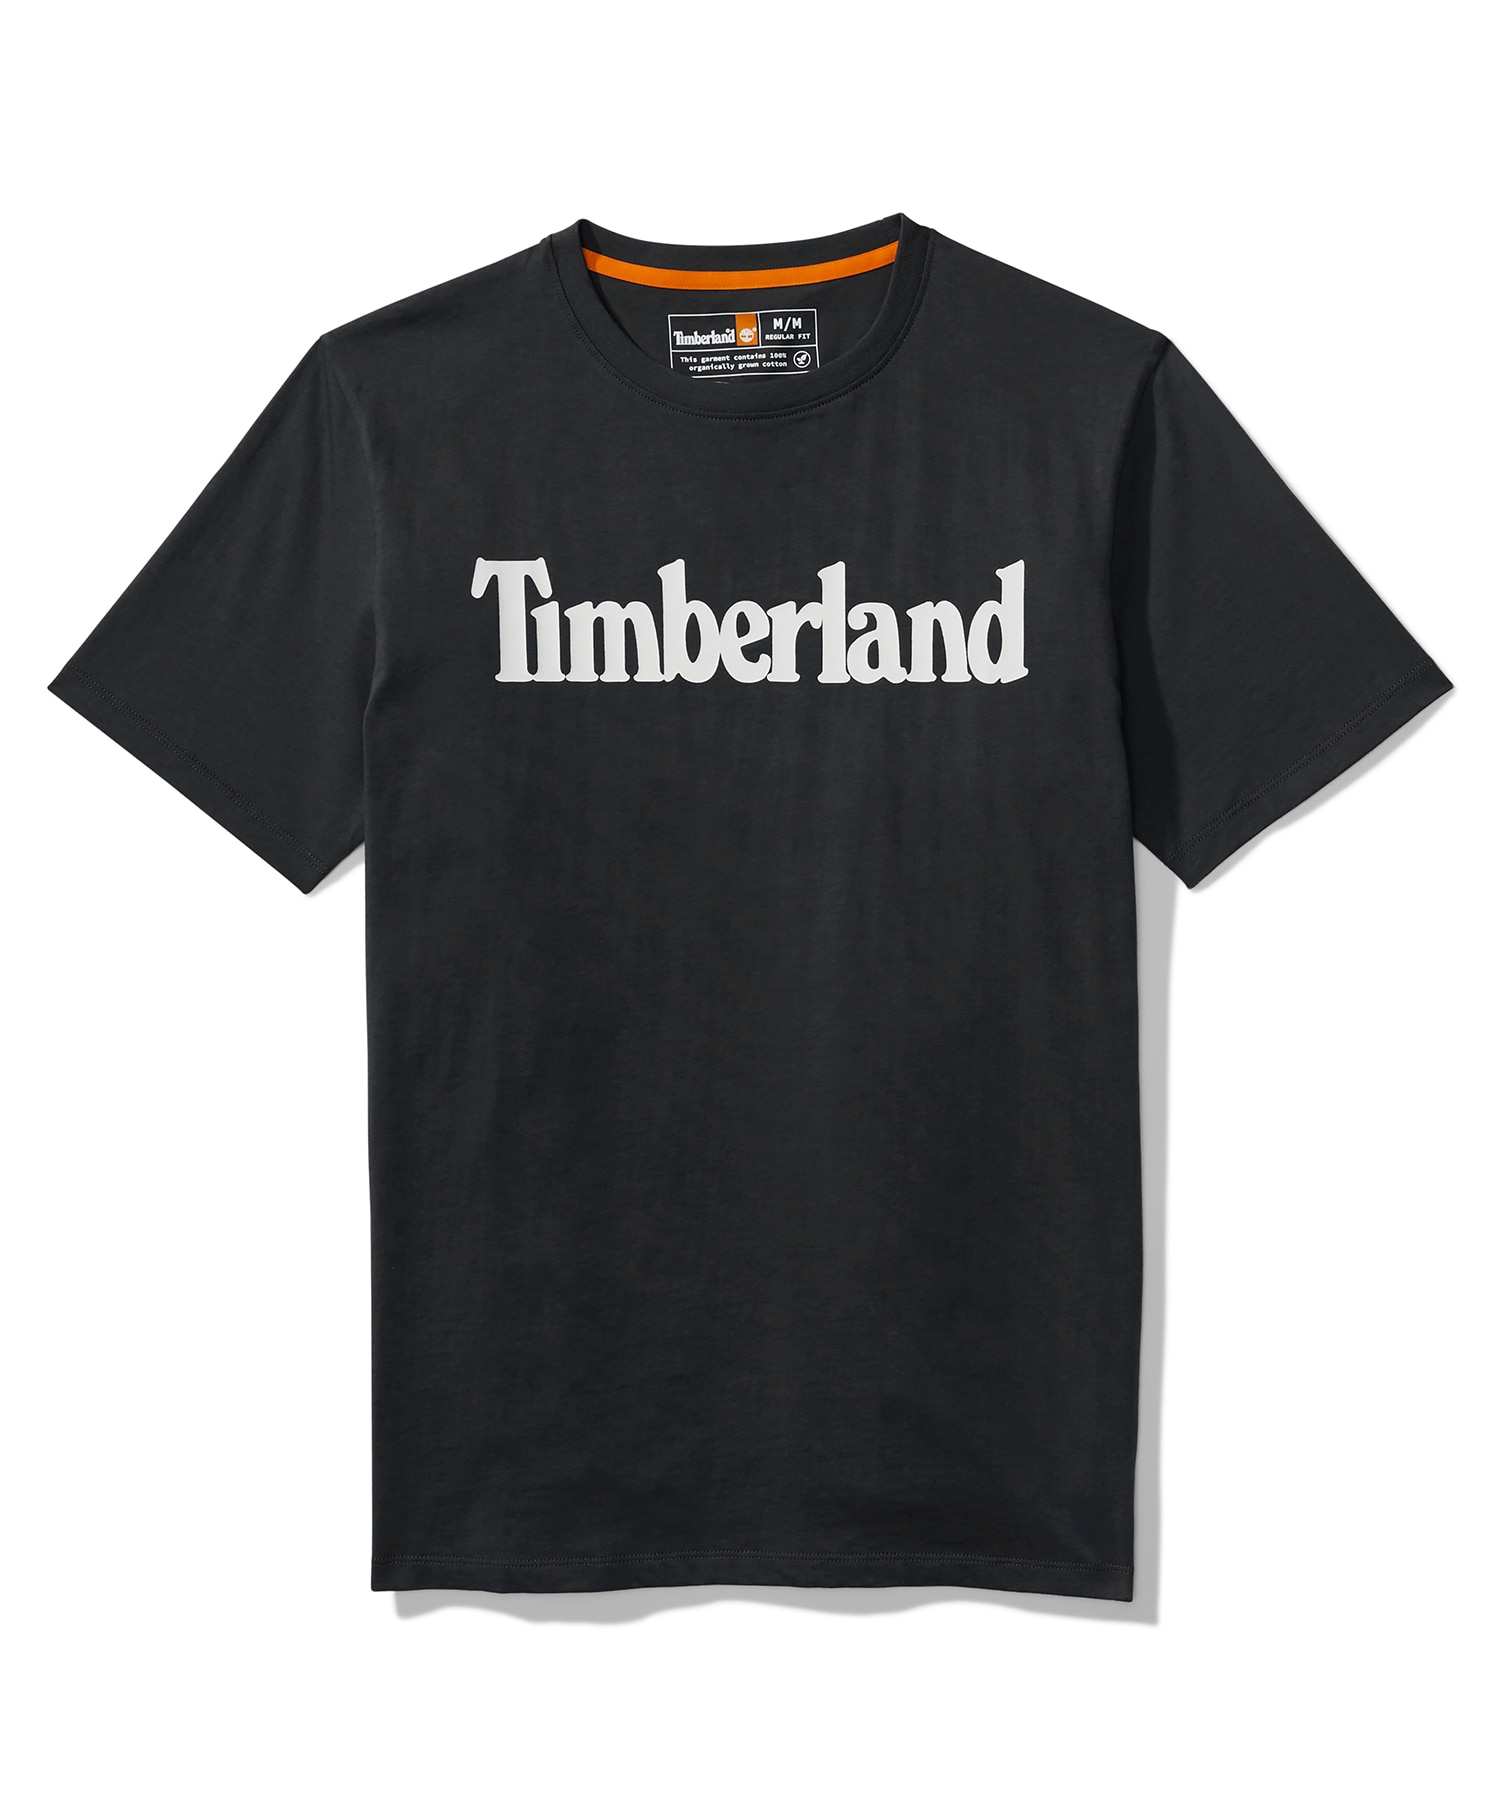 Timberland logo tee